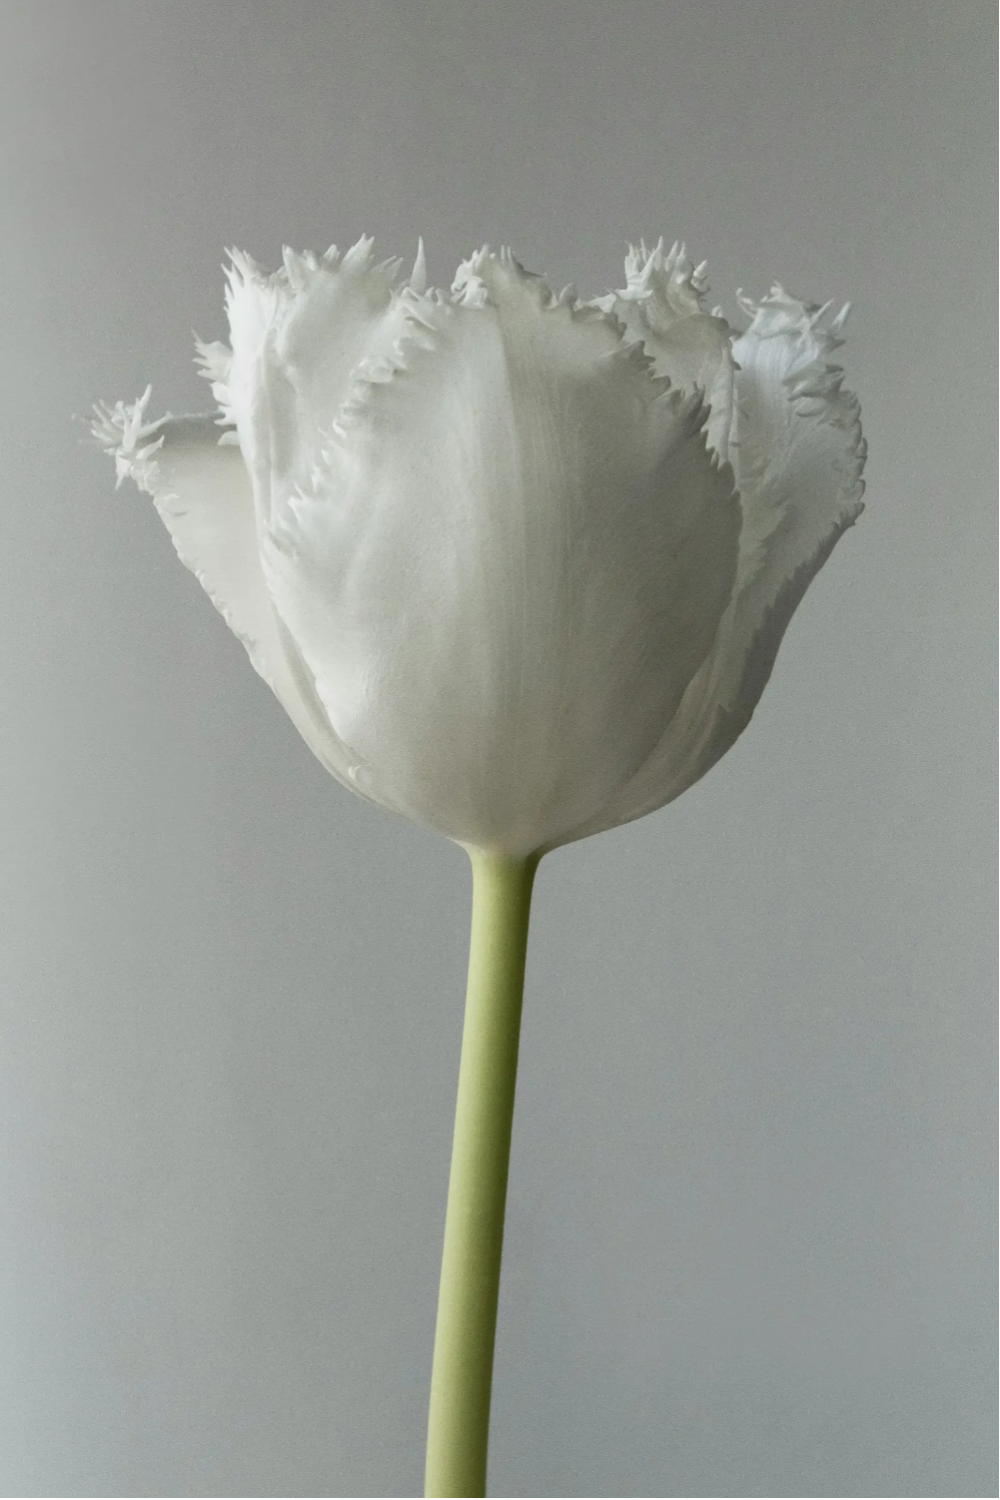 A bright white flower